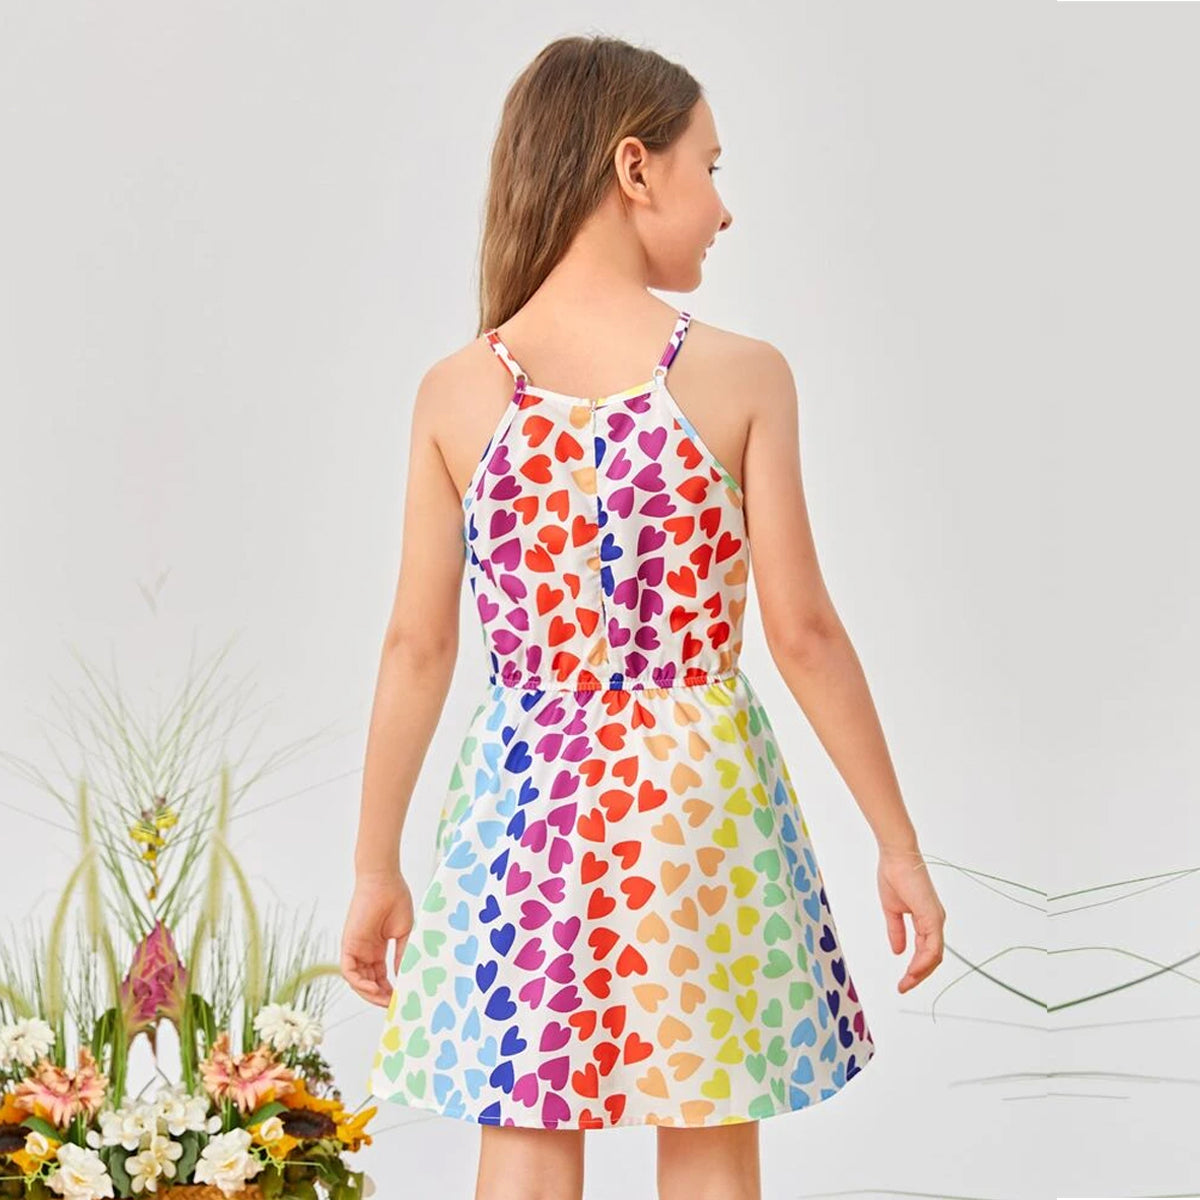 Kids Stylish Heart Design Ruffle Trim Frocks & Dresses for Baby Girl.